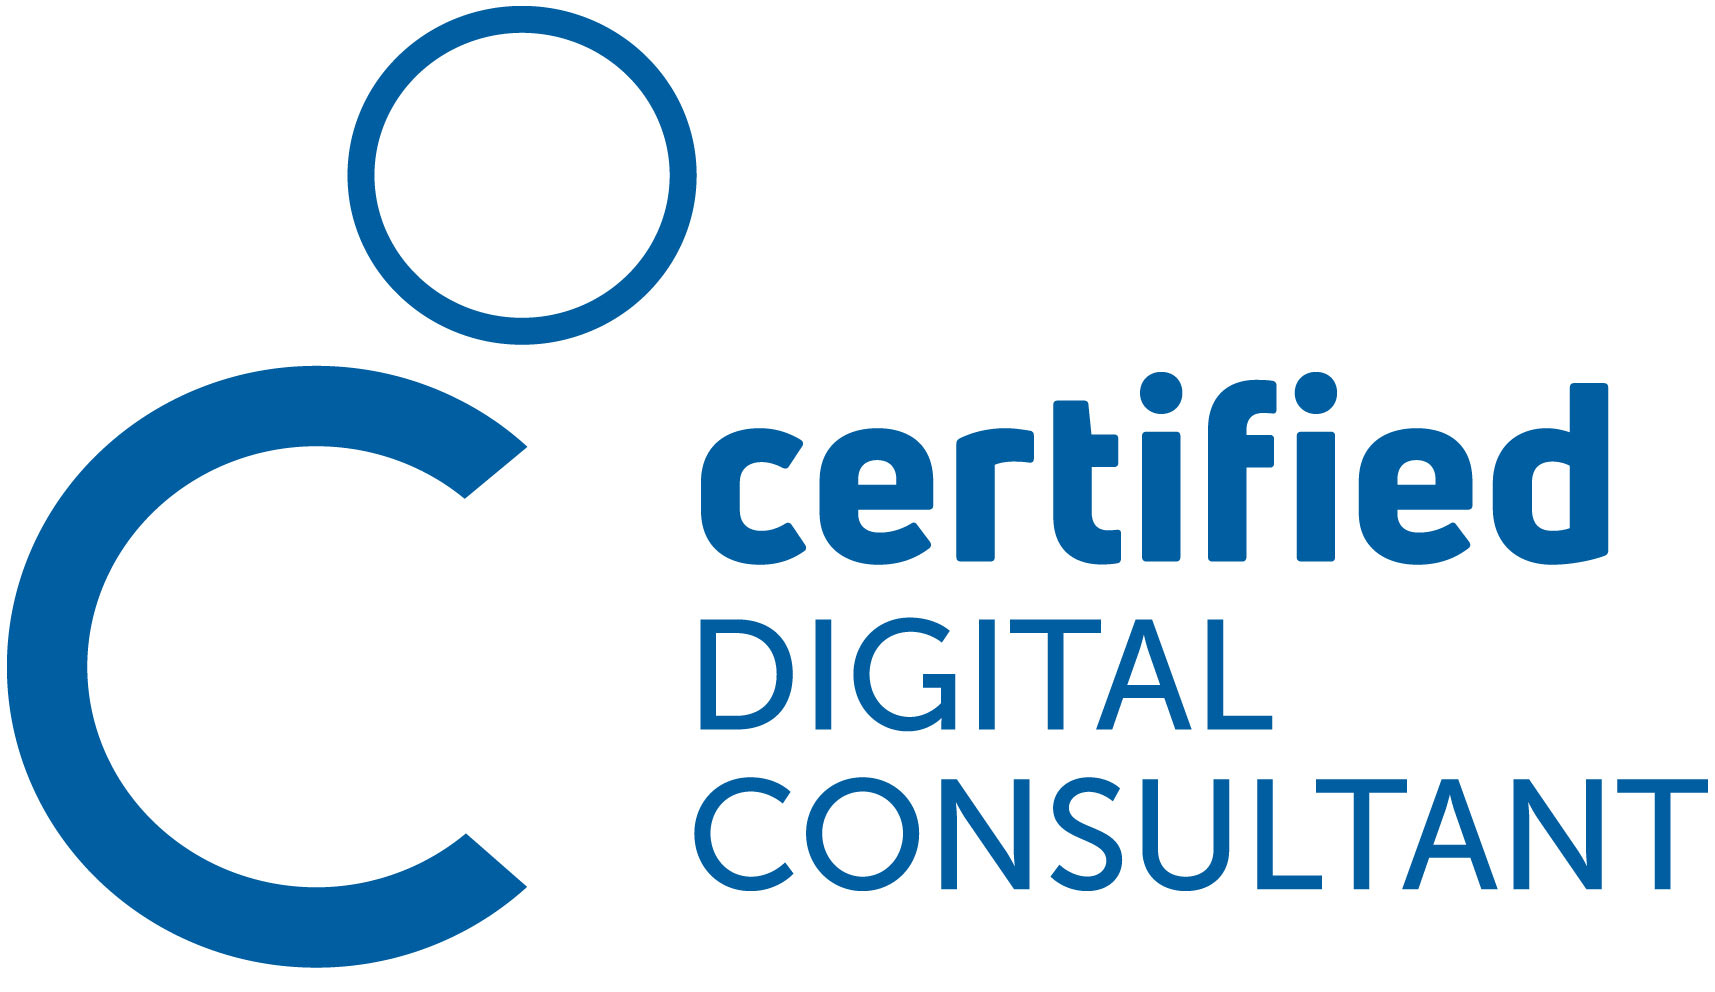 digital consultan logo web